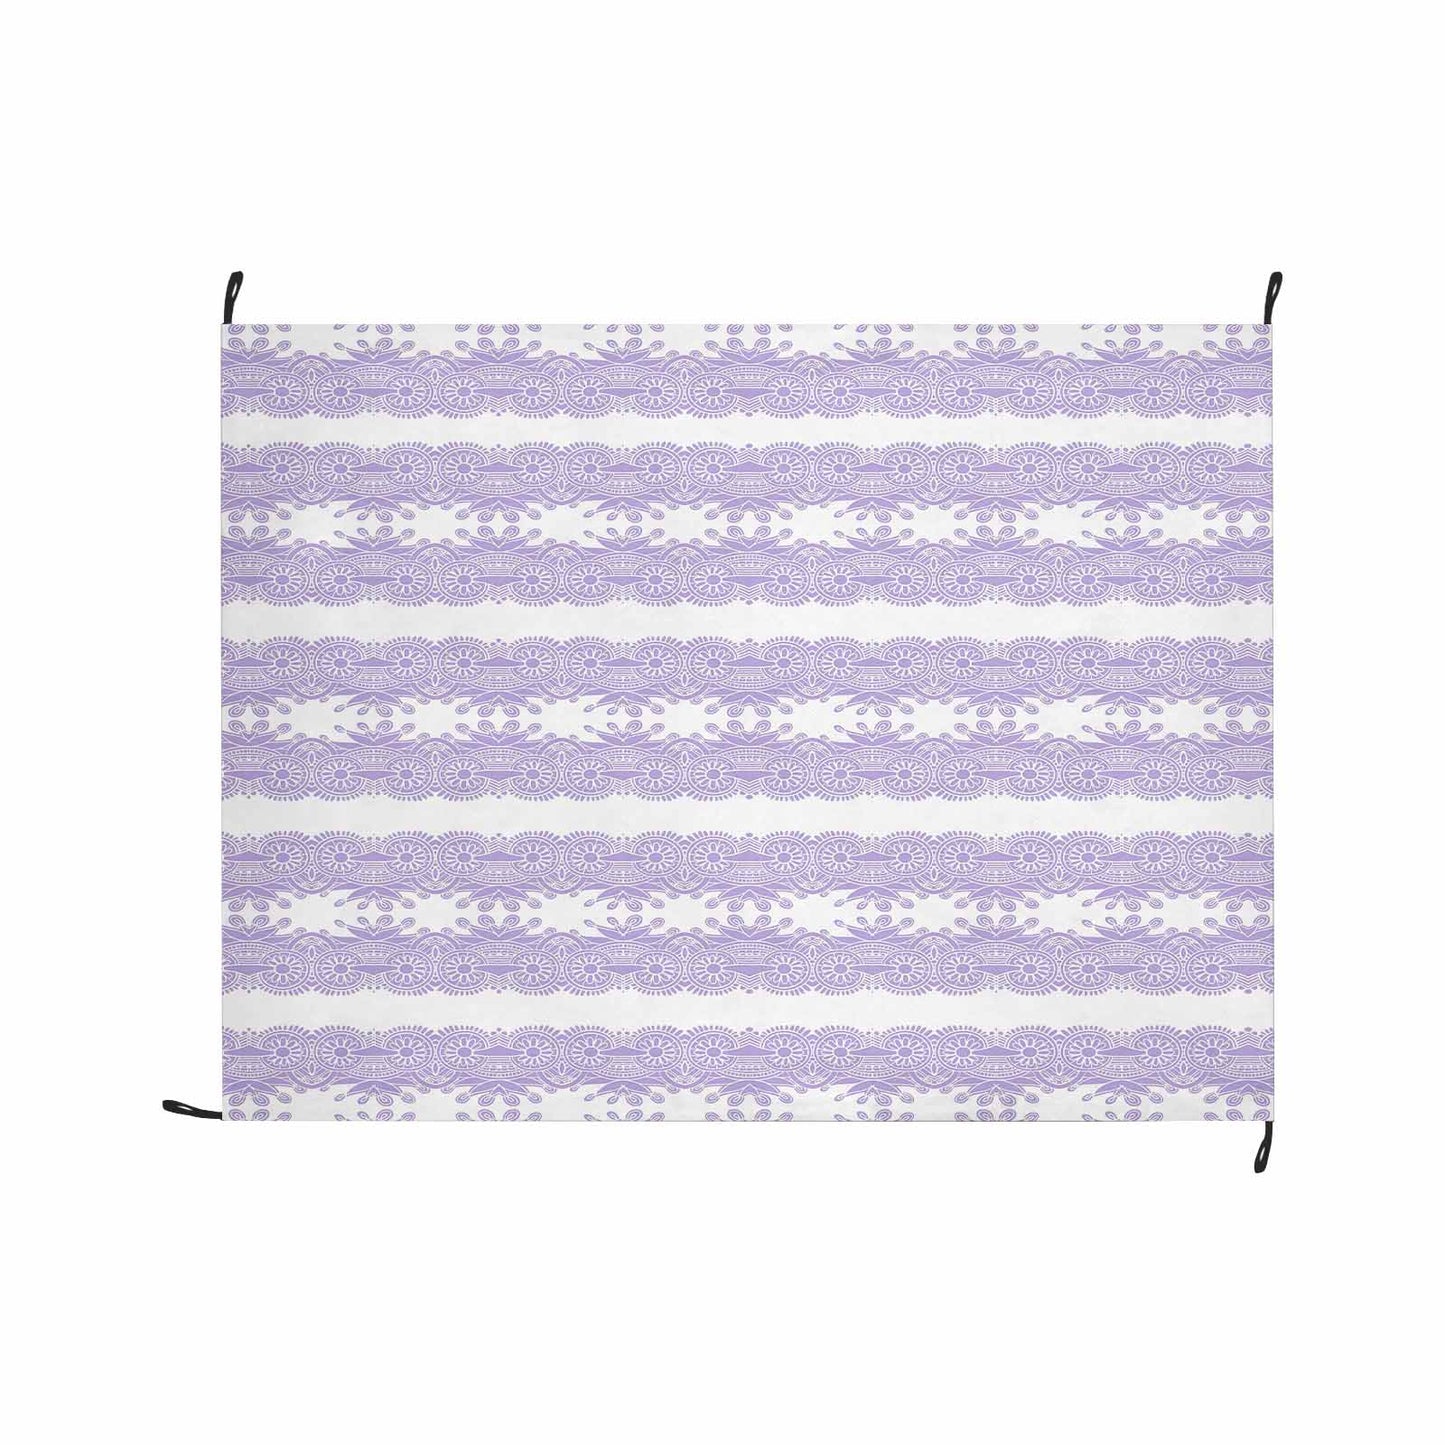 Victorian lace print waterproof picnic mat, 69 x 55in, design 07